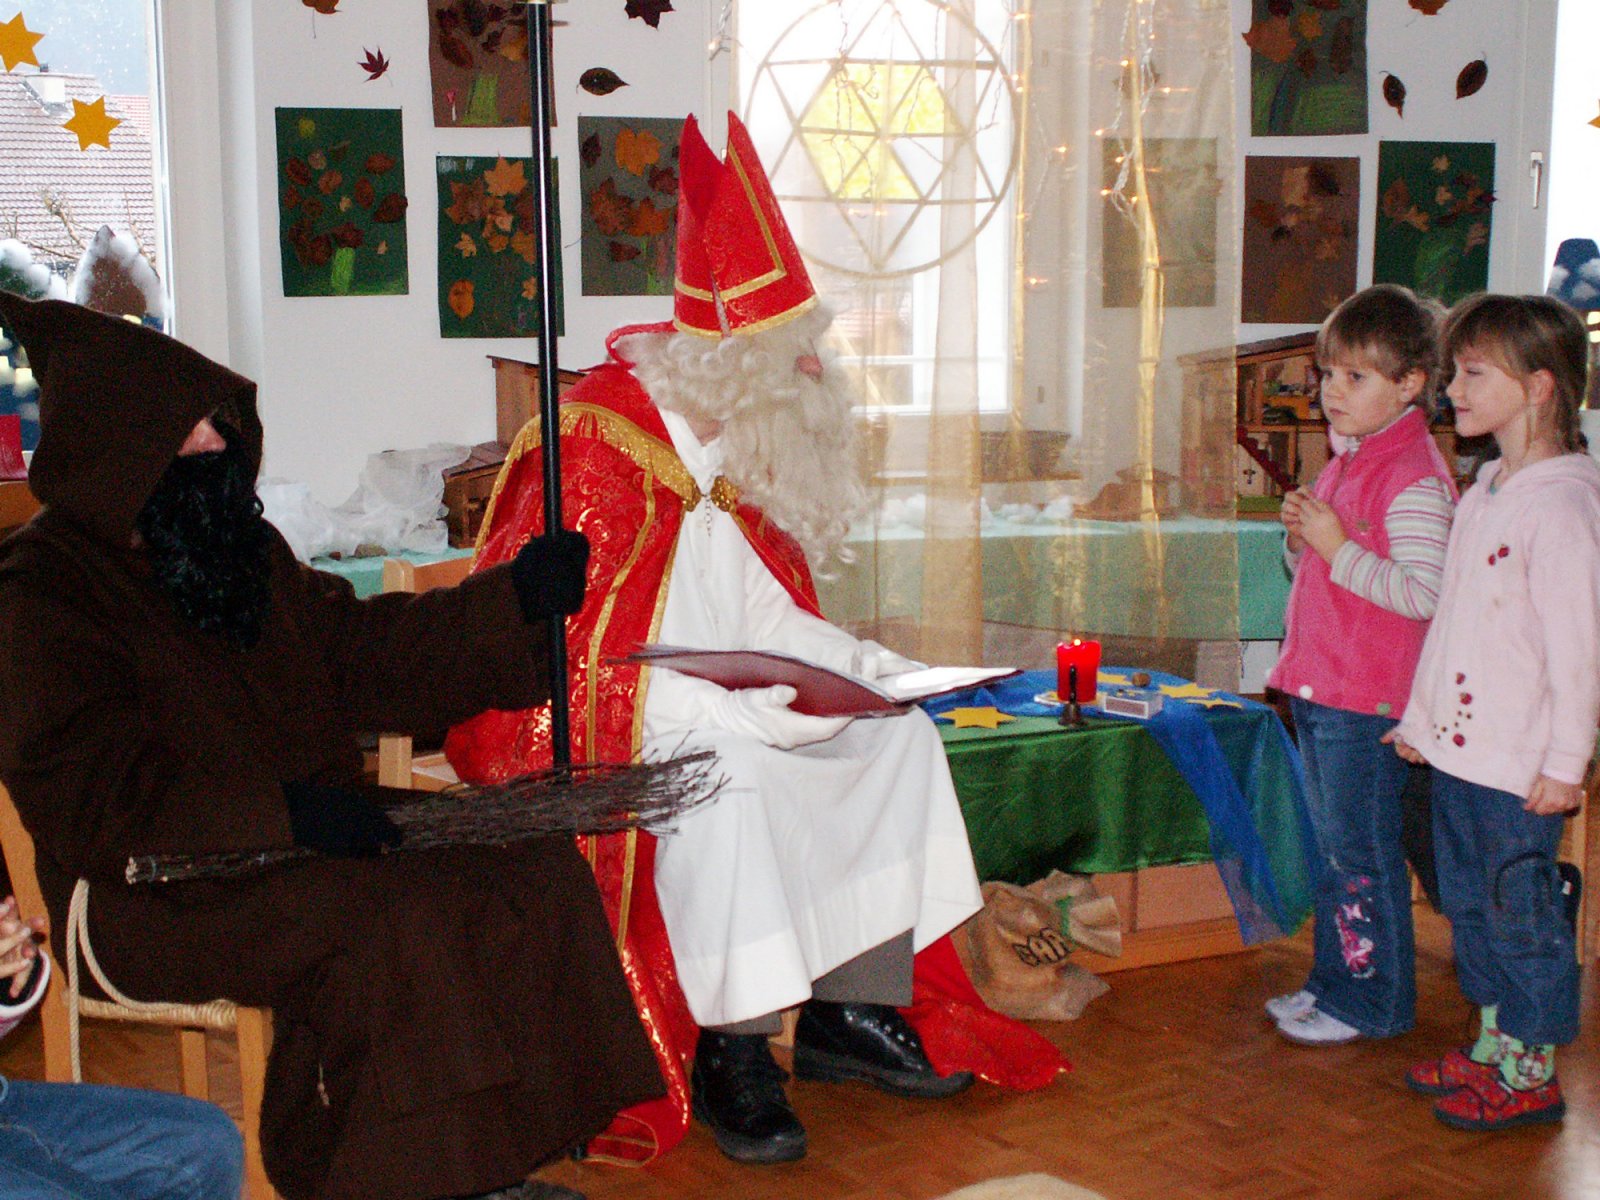 Kindergarten Visit during the St. Nicholas Tradition in Wil, Switzerland